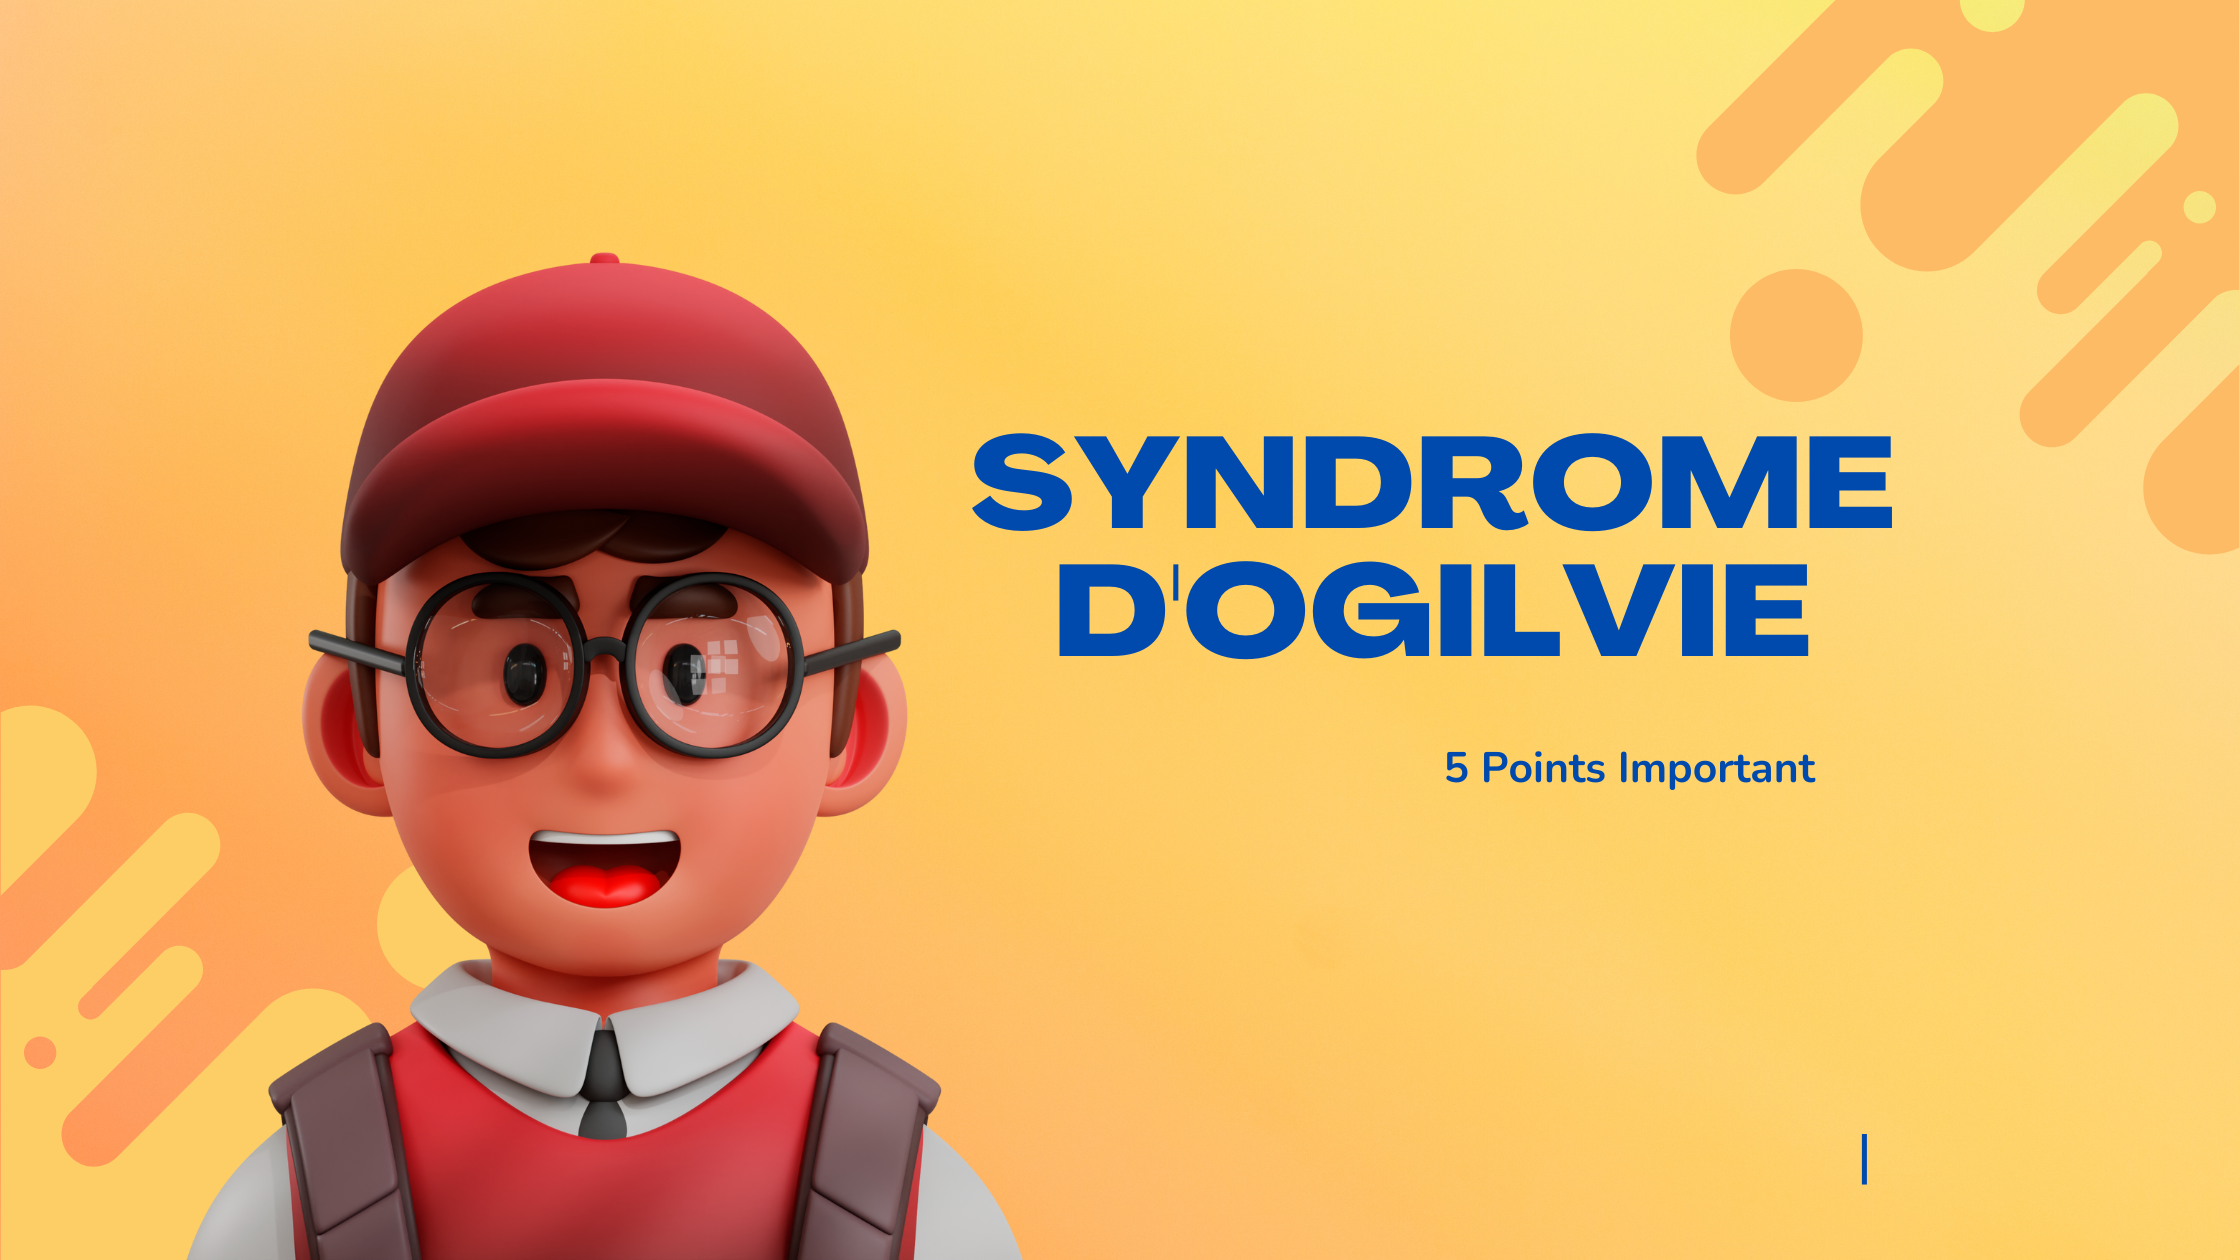 Syndrome d'Ogilvie | 5 Points Important